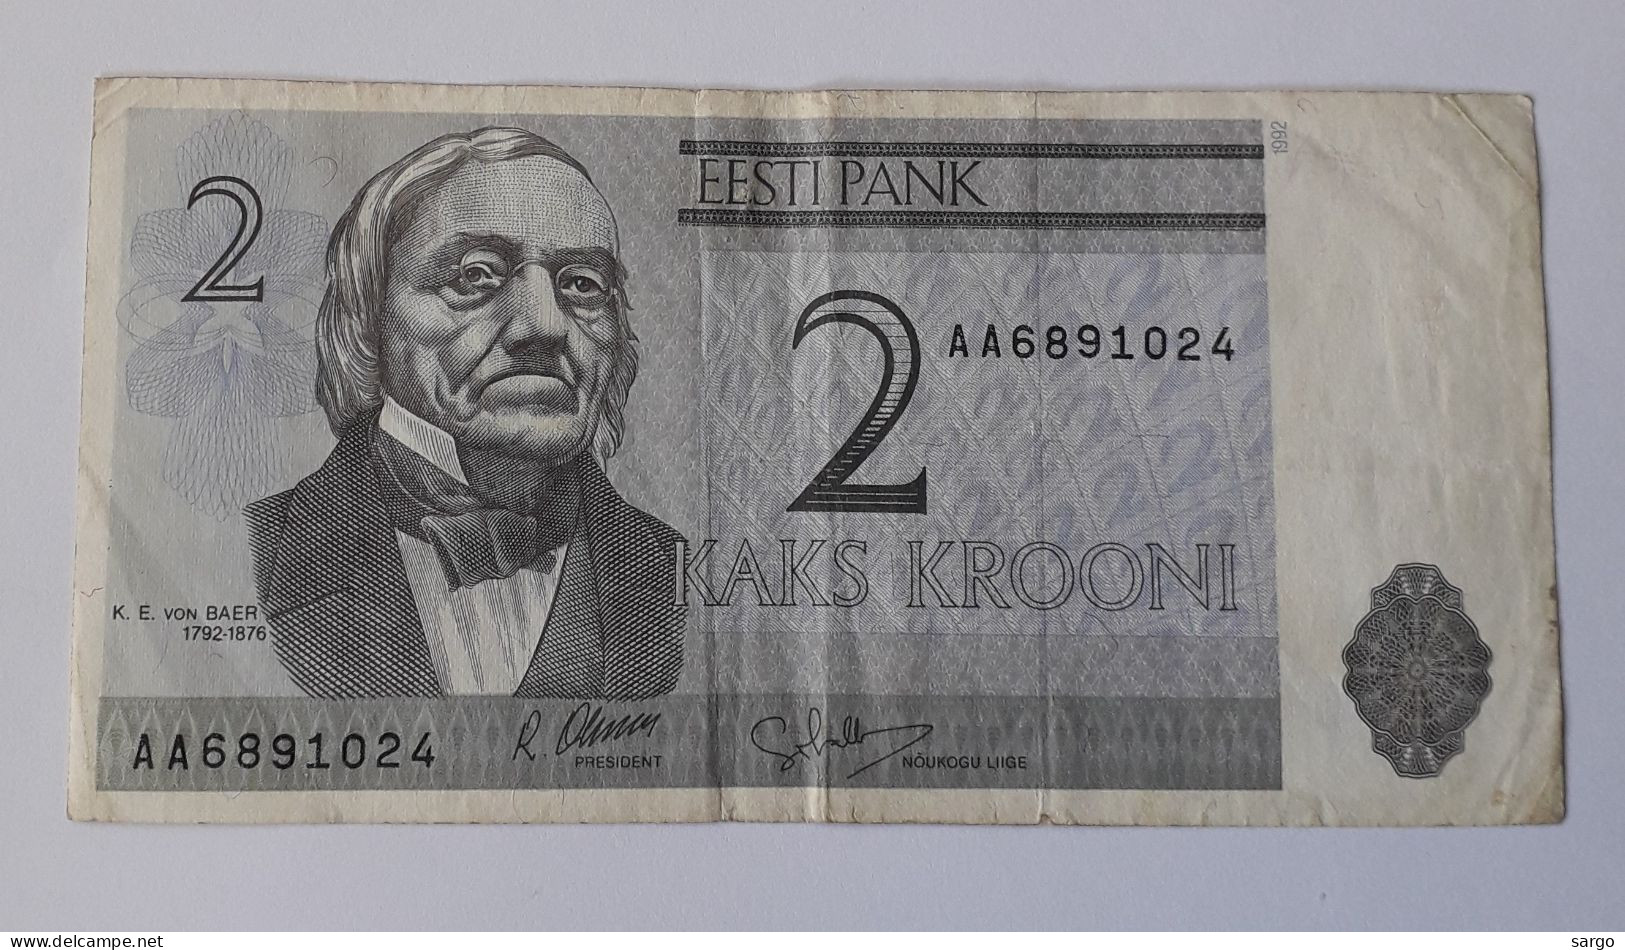 ESTONIA - 2 KROONI -  P 70 - 1992 -  CIRC - BANKNOTES - PAPER MONEY - CARTAMONETA - - Estonia